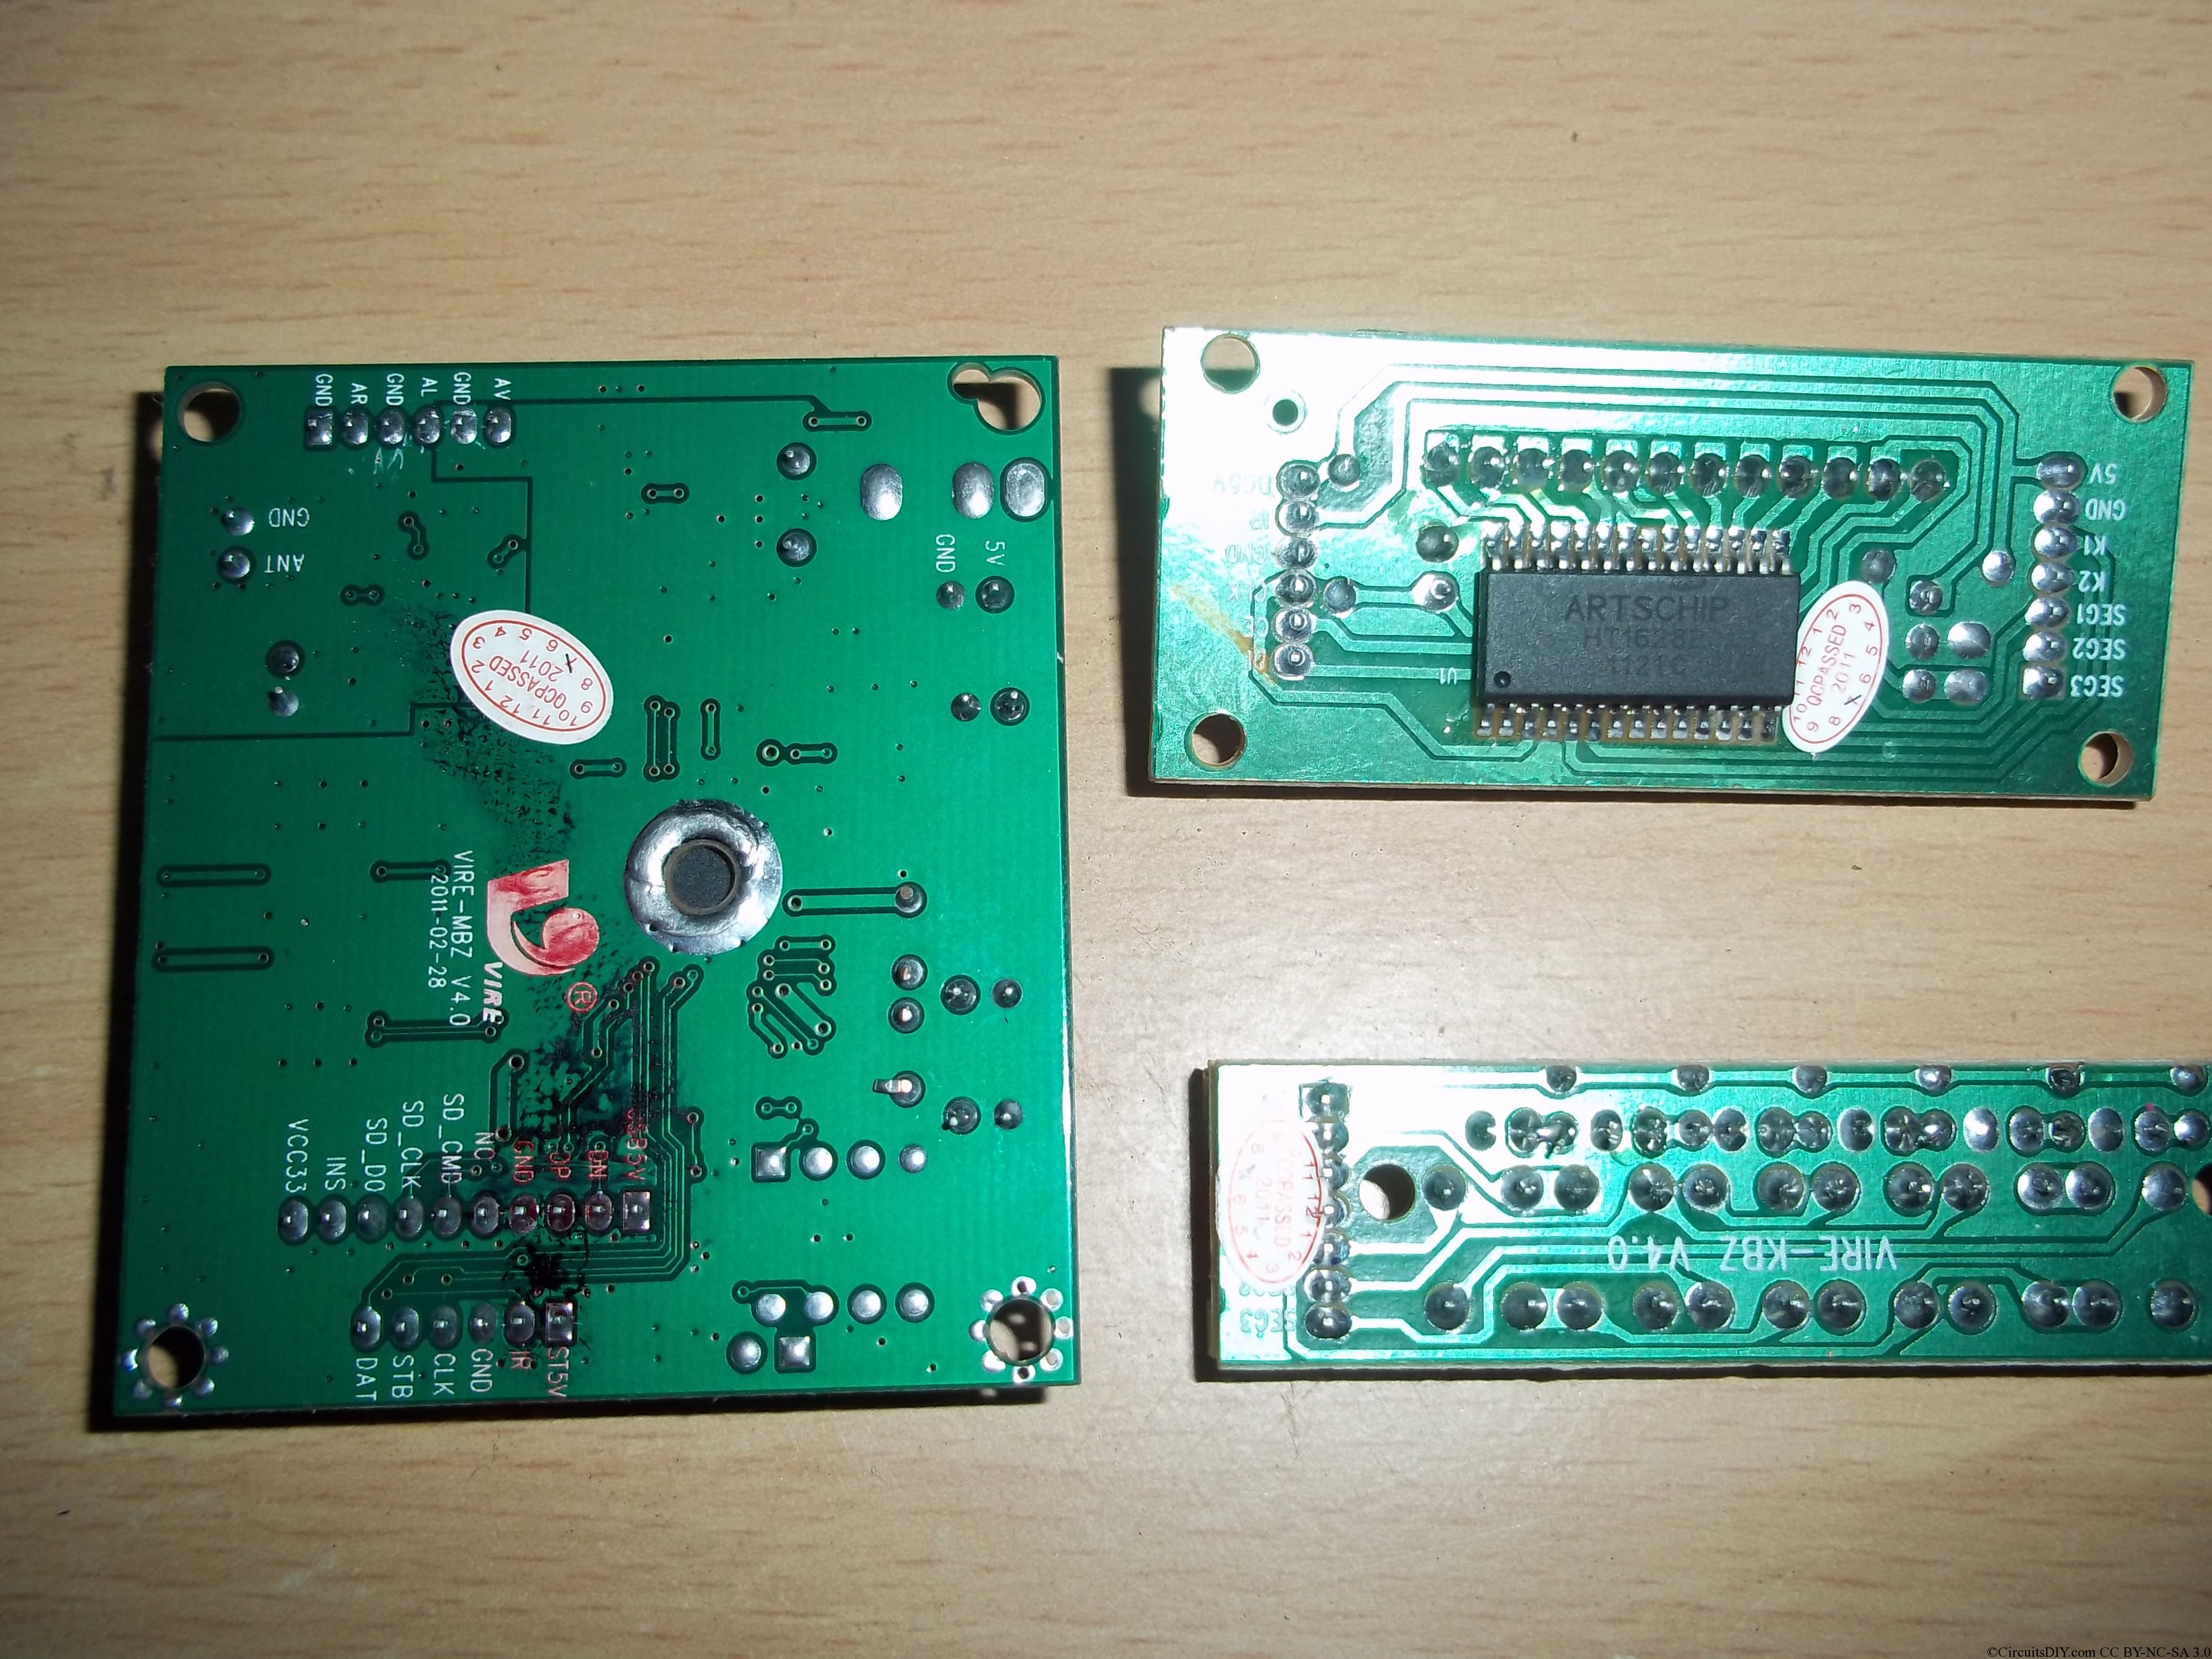 USB MP4 video player kit review - Circuits DIY